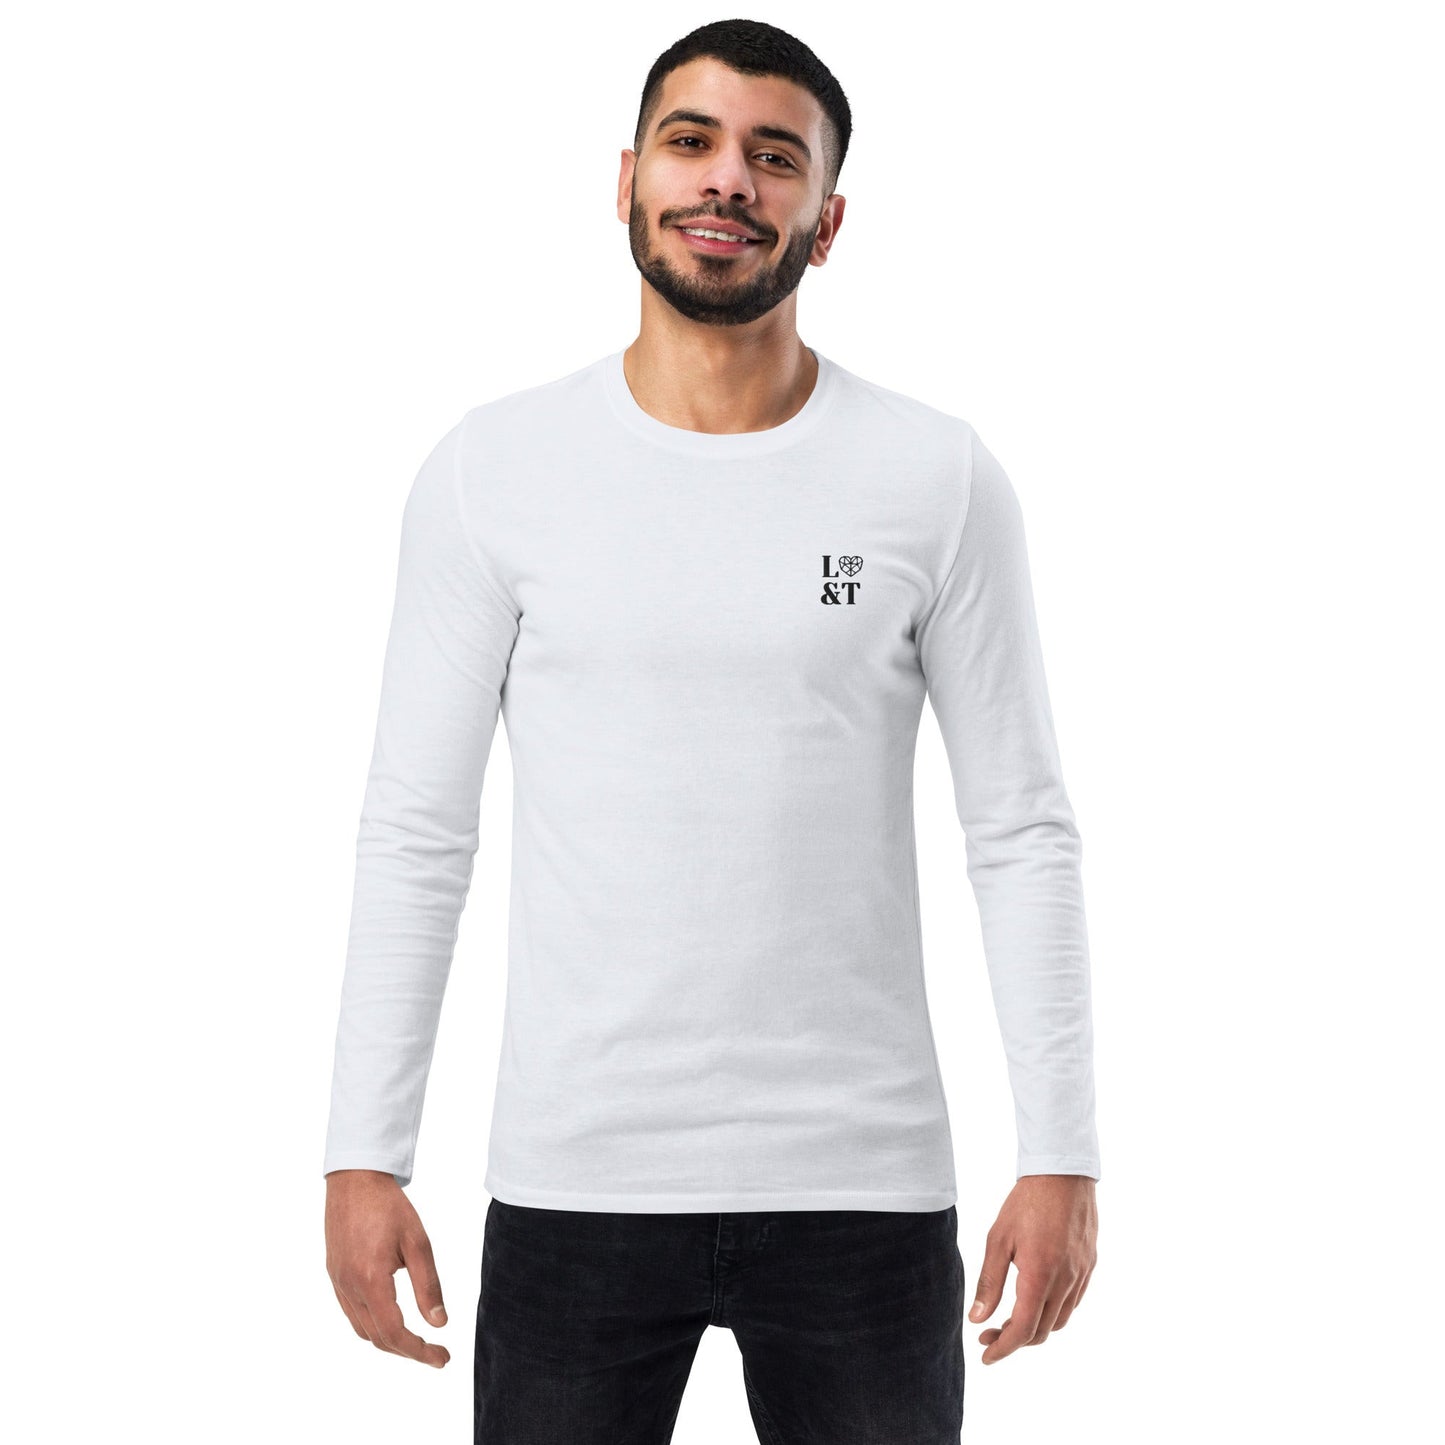 L&T's Unisex Long Sleeve T-Shirt